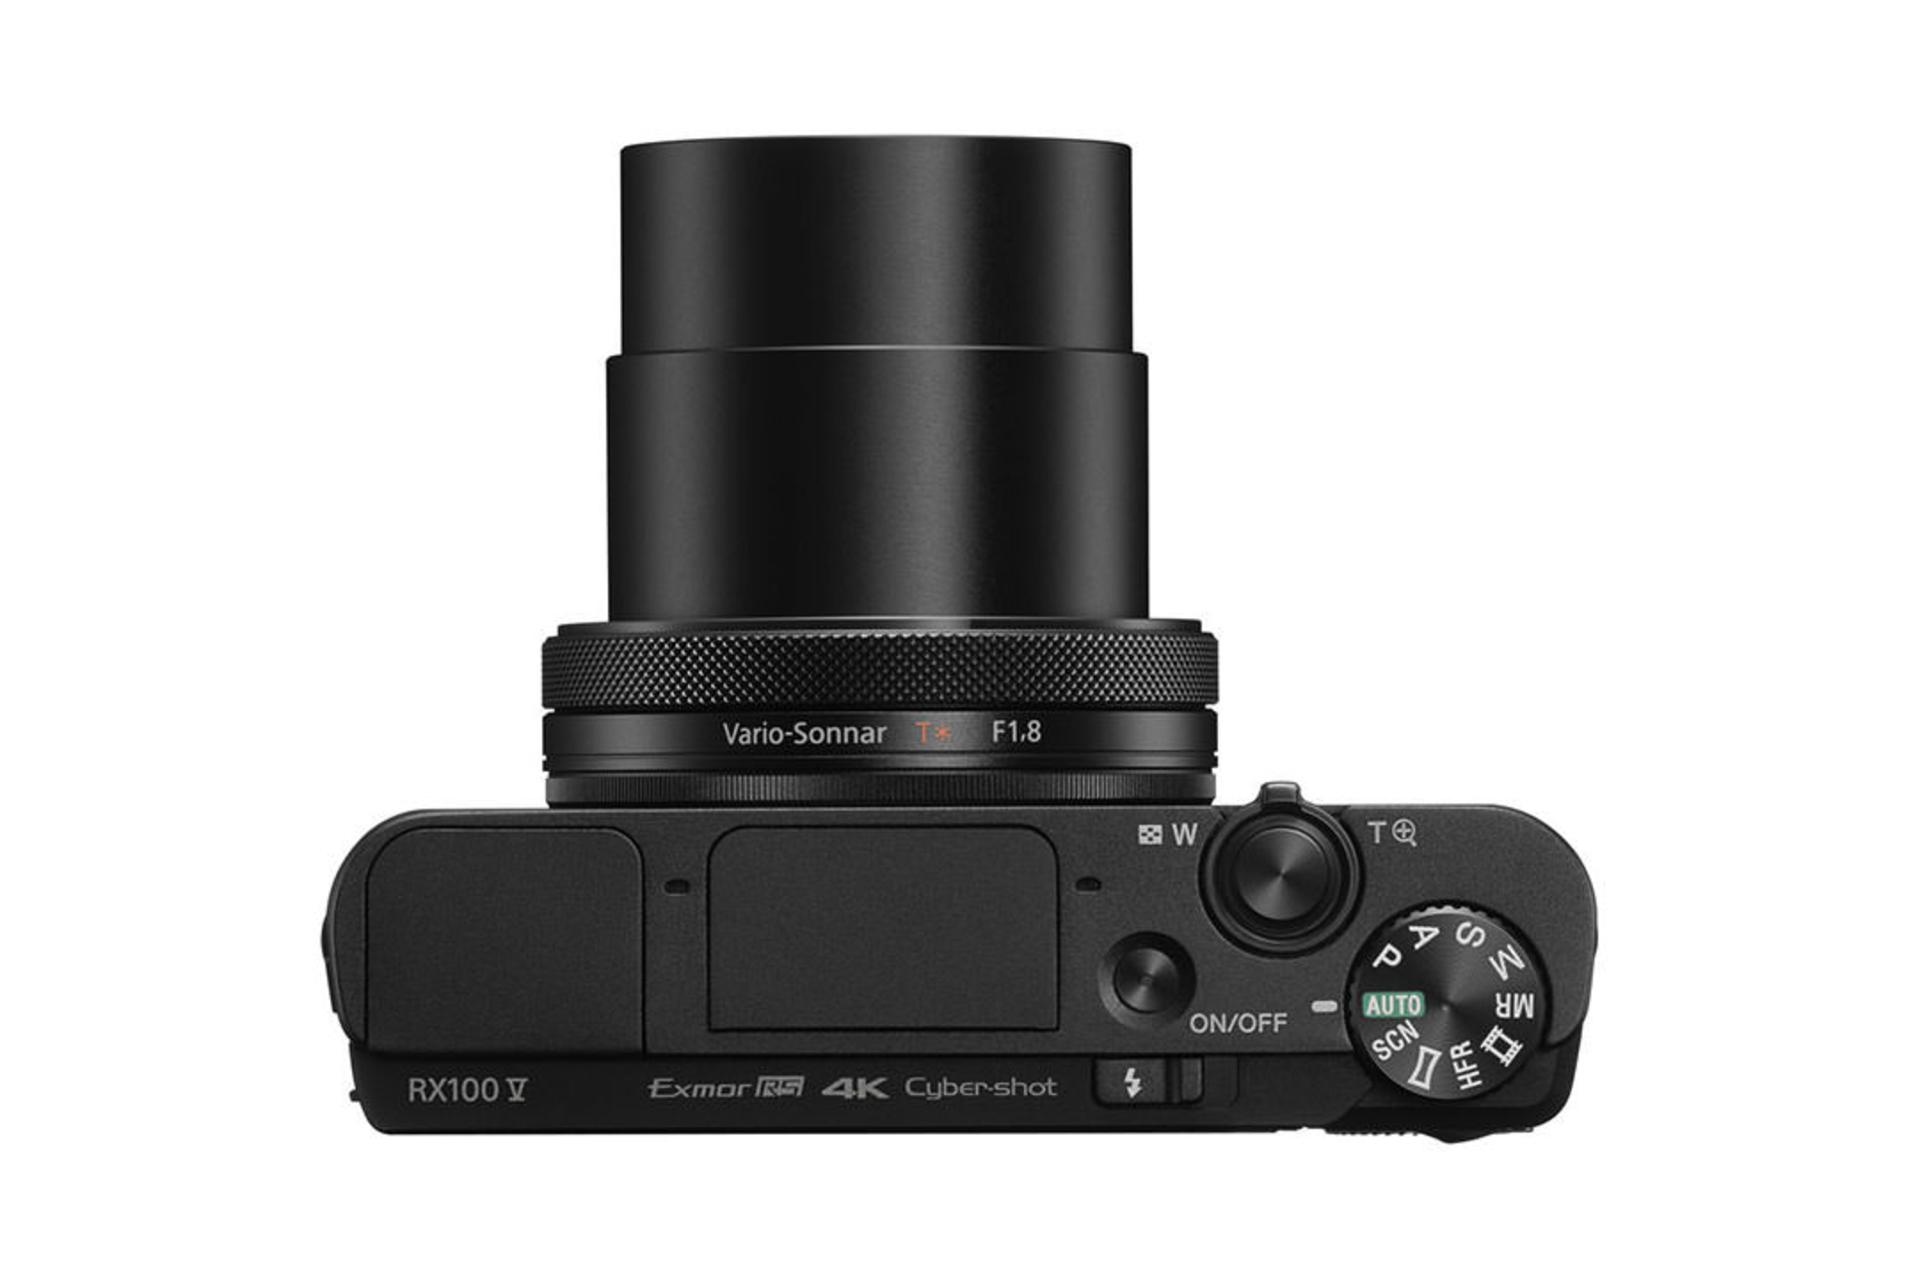 Sony Cyber-shot DSC-RX100 V	